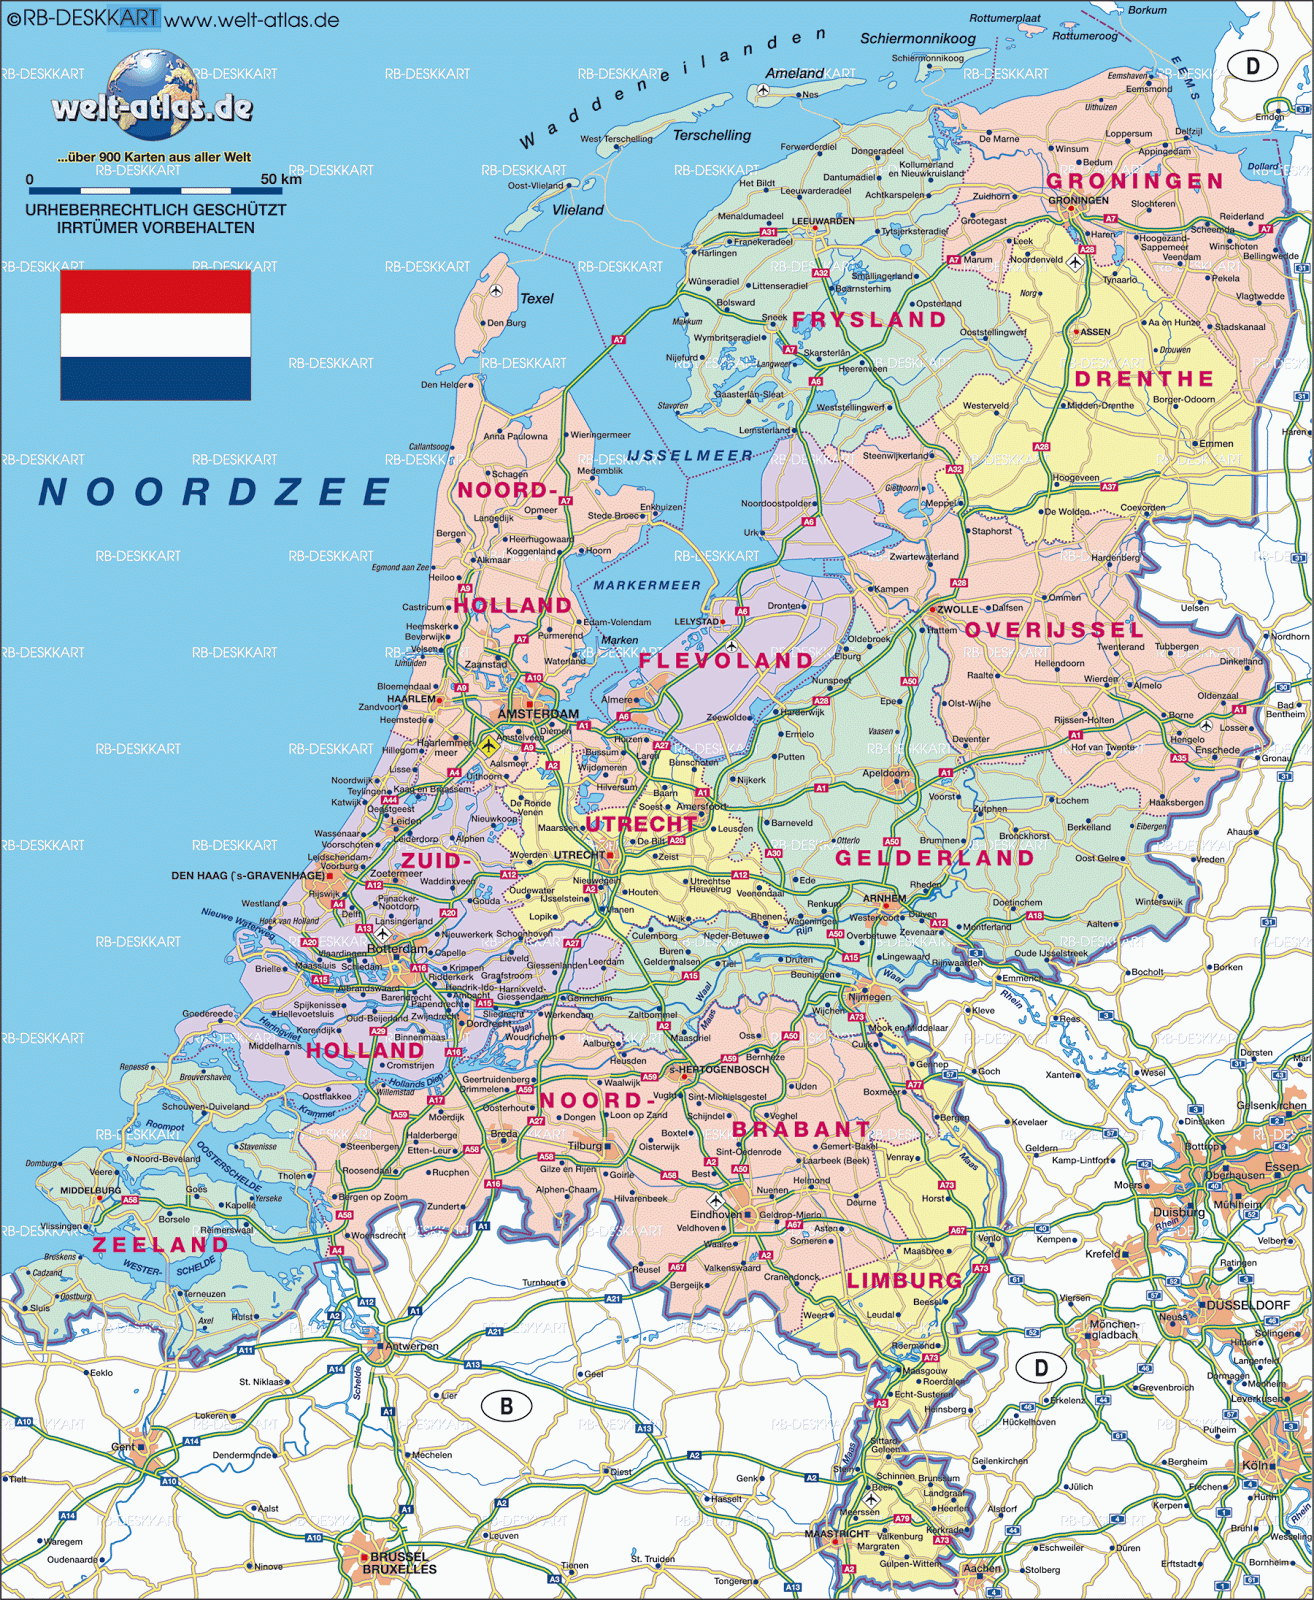 mapamundi | mapas del mundo y mucho más.: Mapamundi: Mapa de Holanda